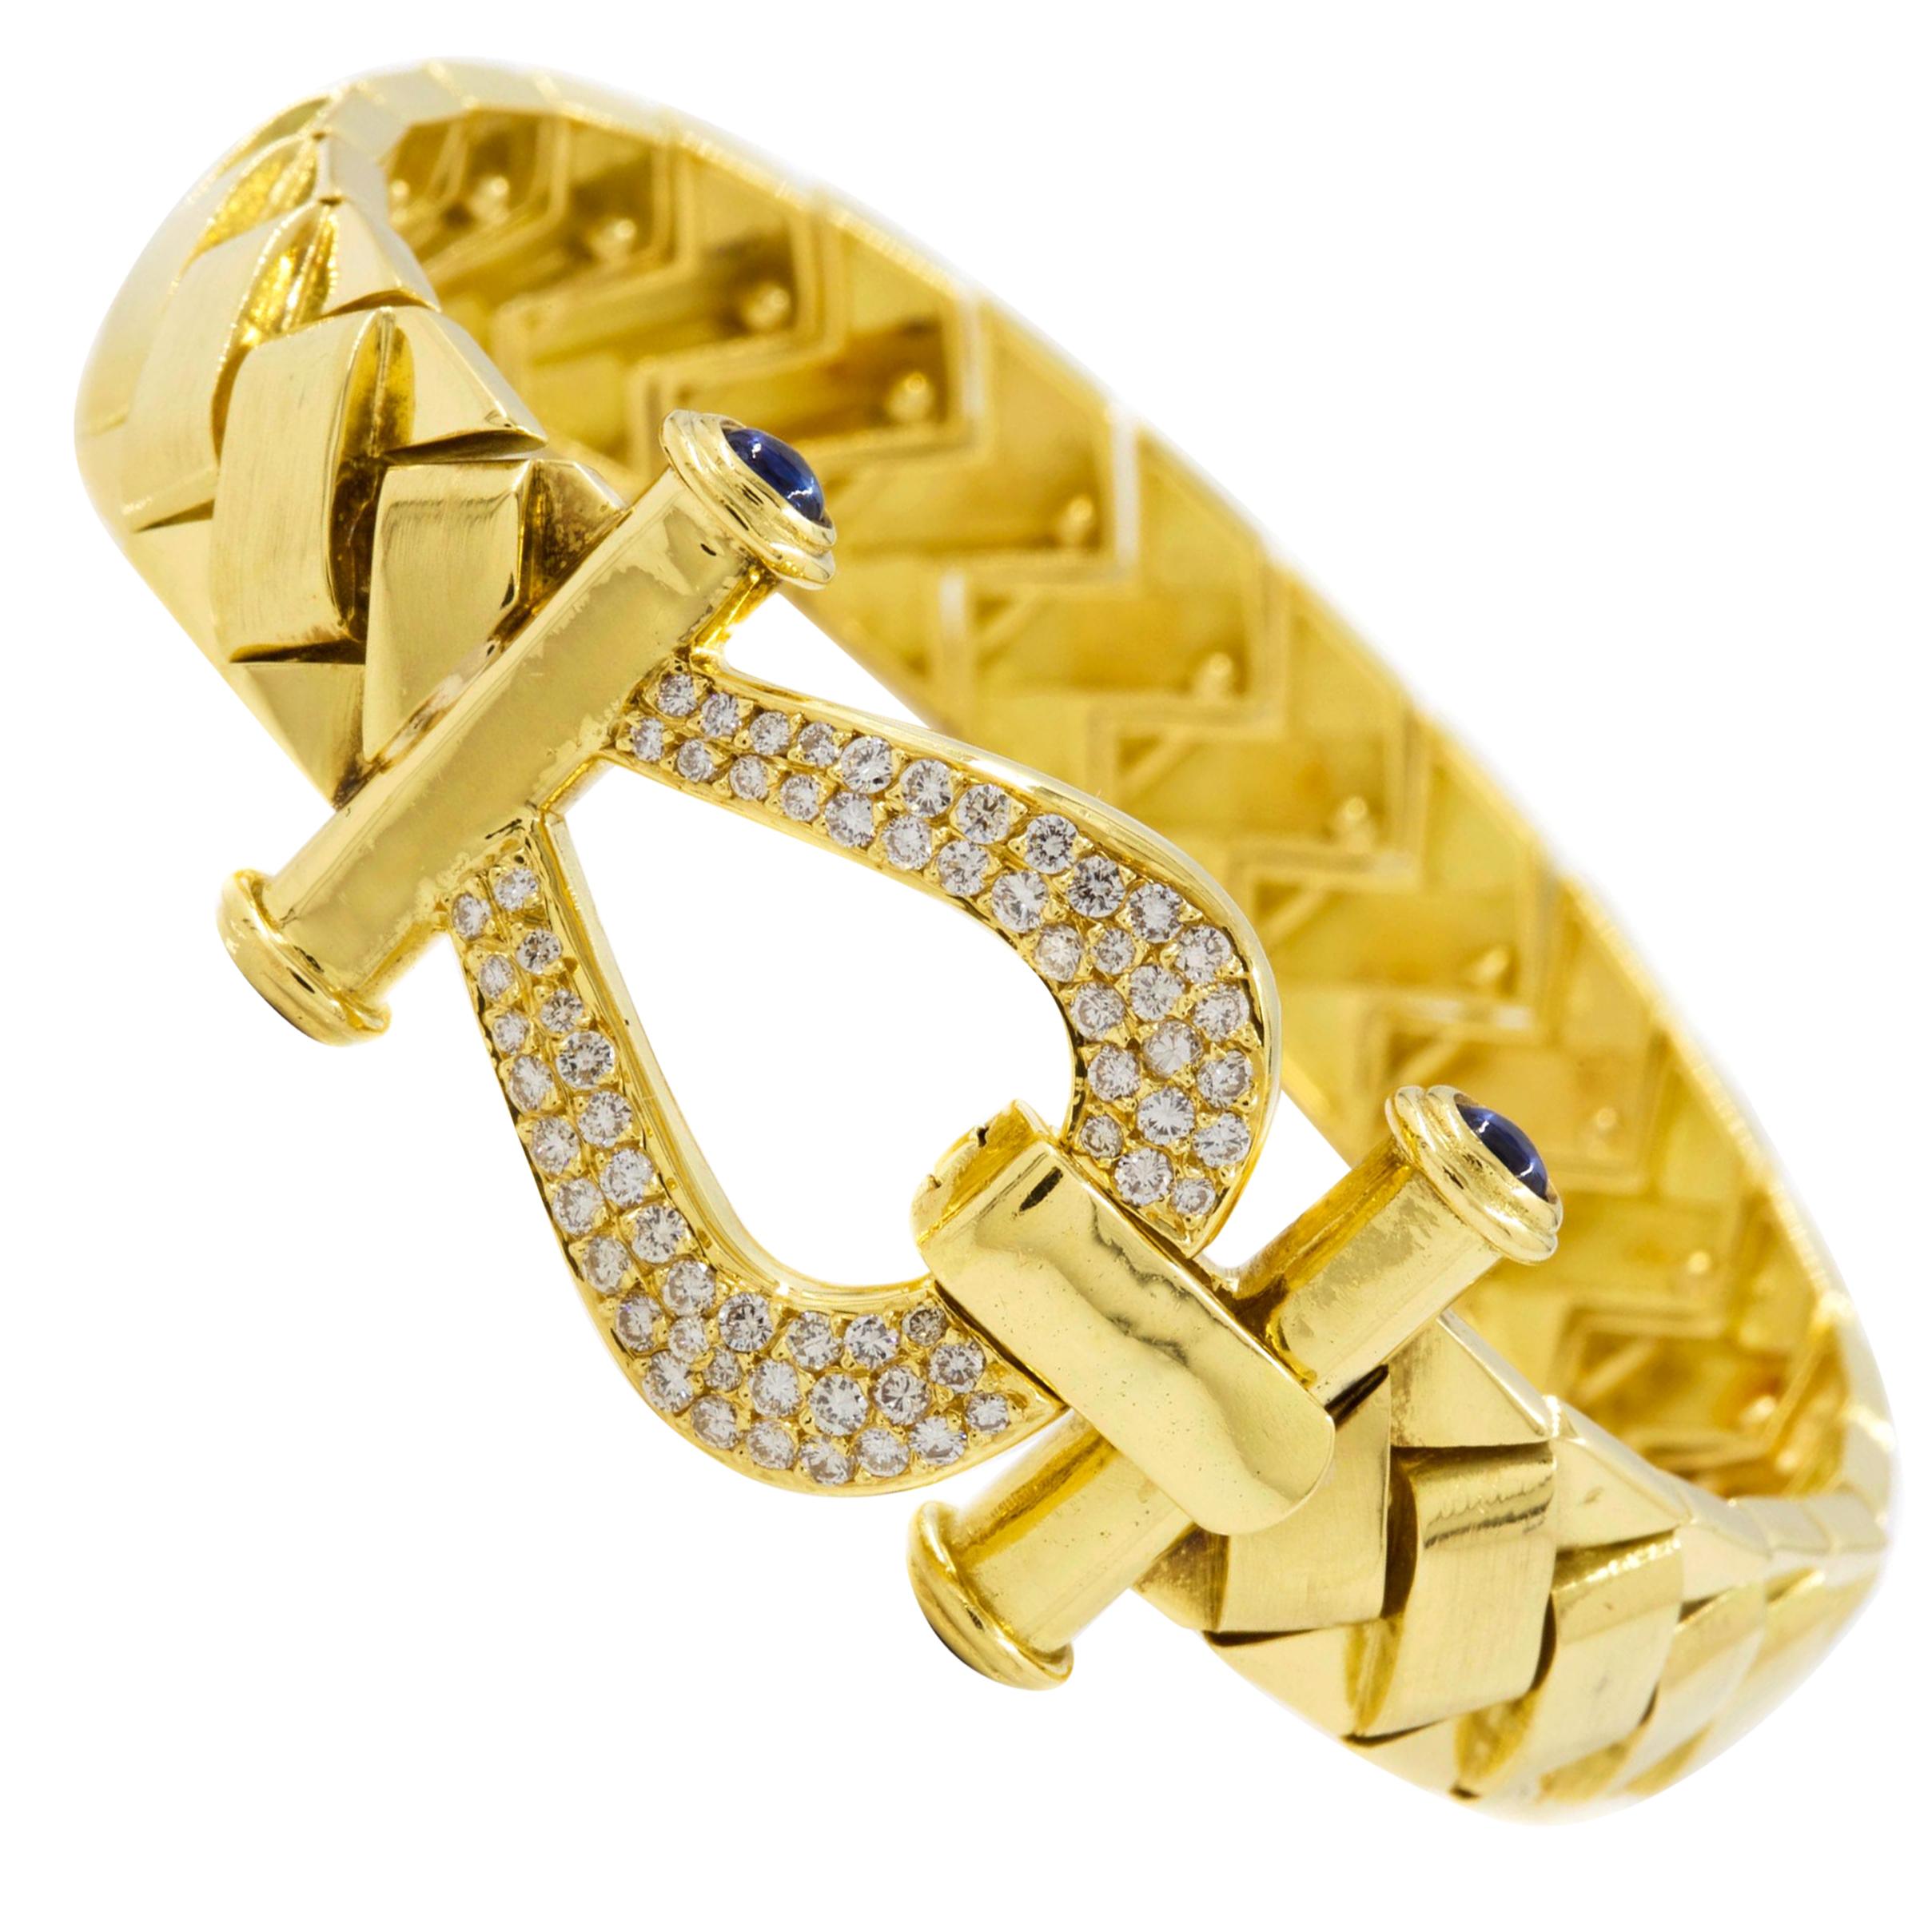 Elegant 18-Karat Gold Woven Strap Bracelet with 65 Diamonds and 4 Sapphires